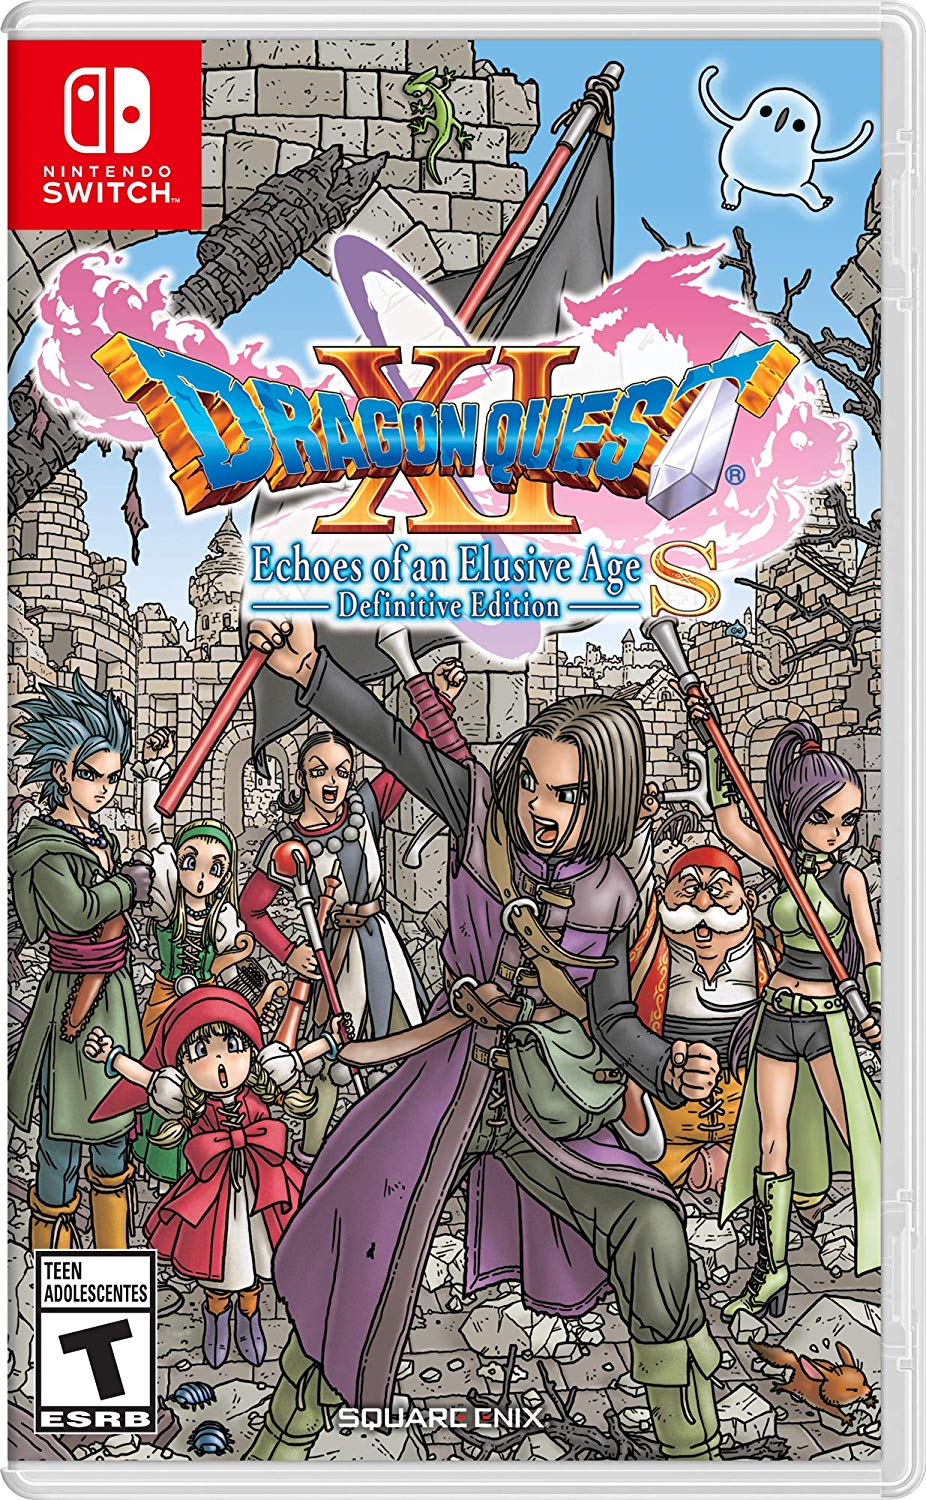 Dragon Quest 11 prequel Dragon Quest Treasures Switch release date  announced - Polygon